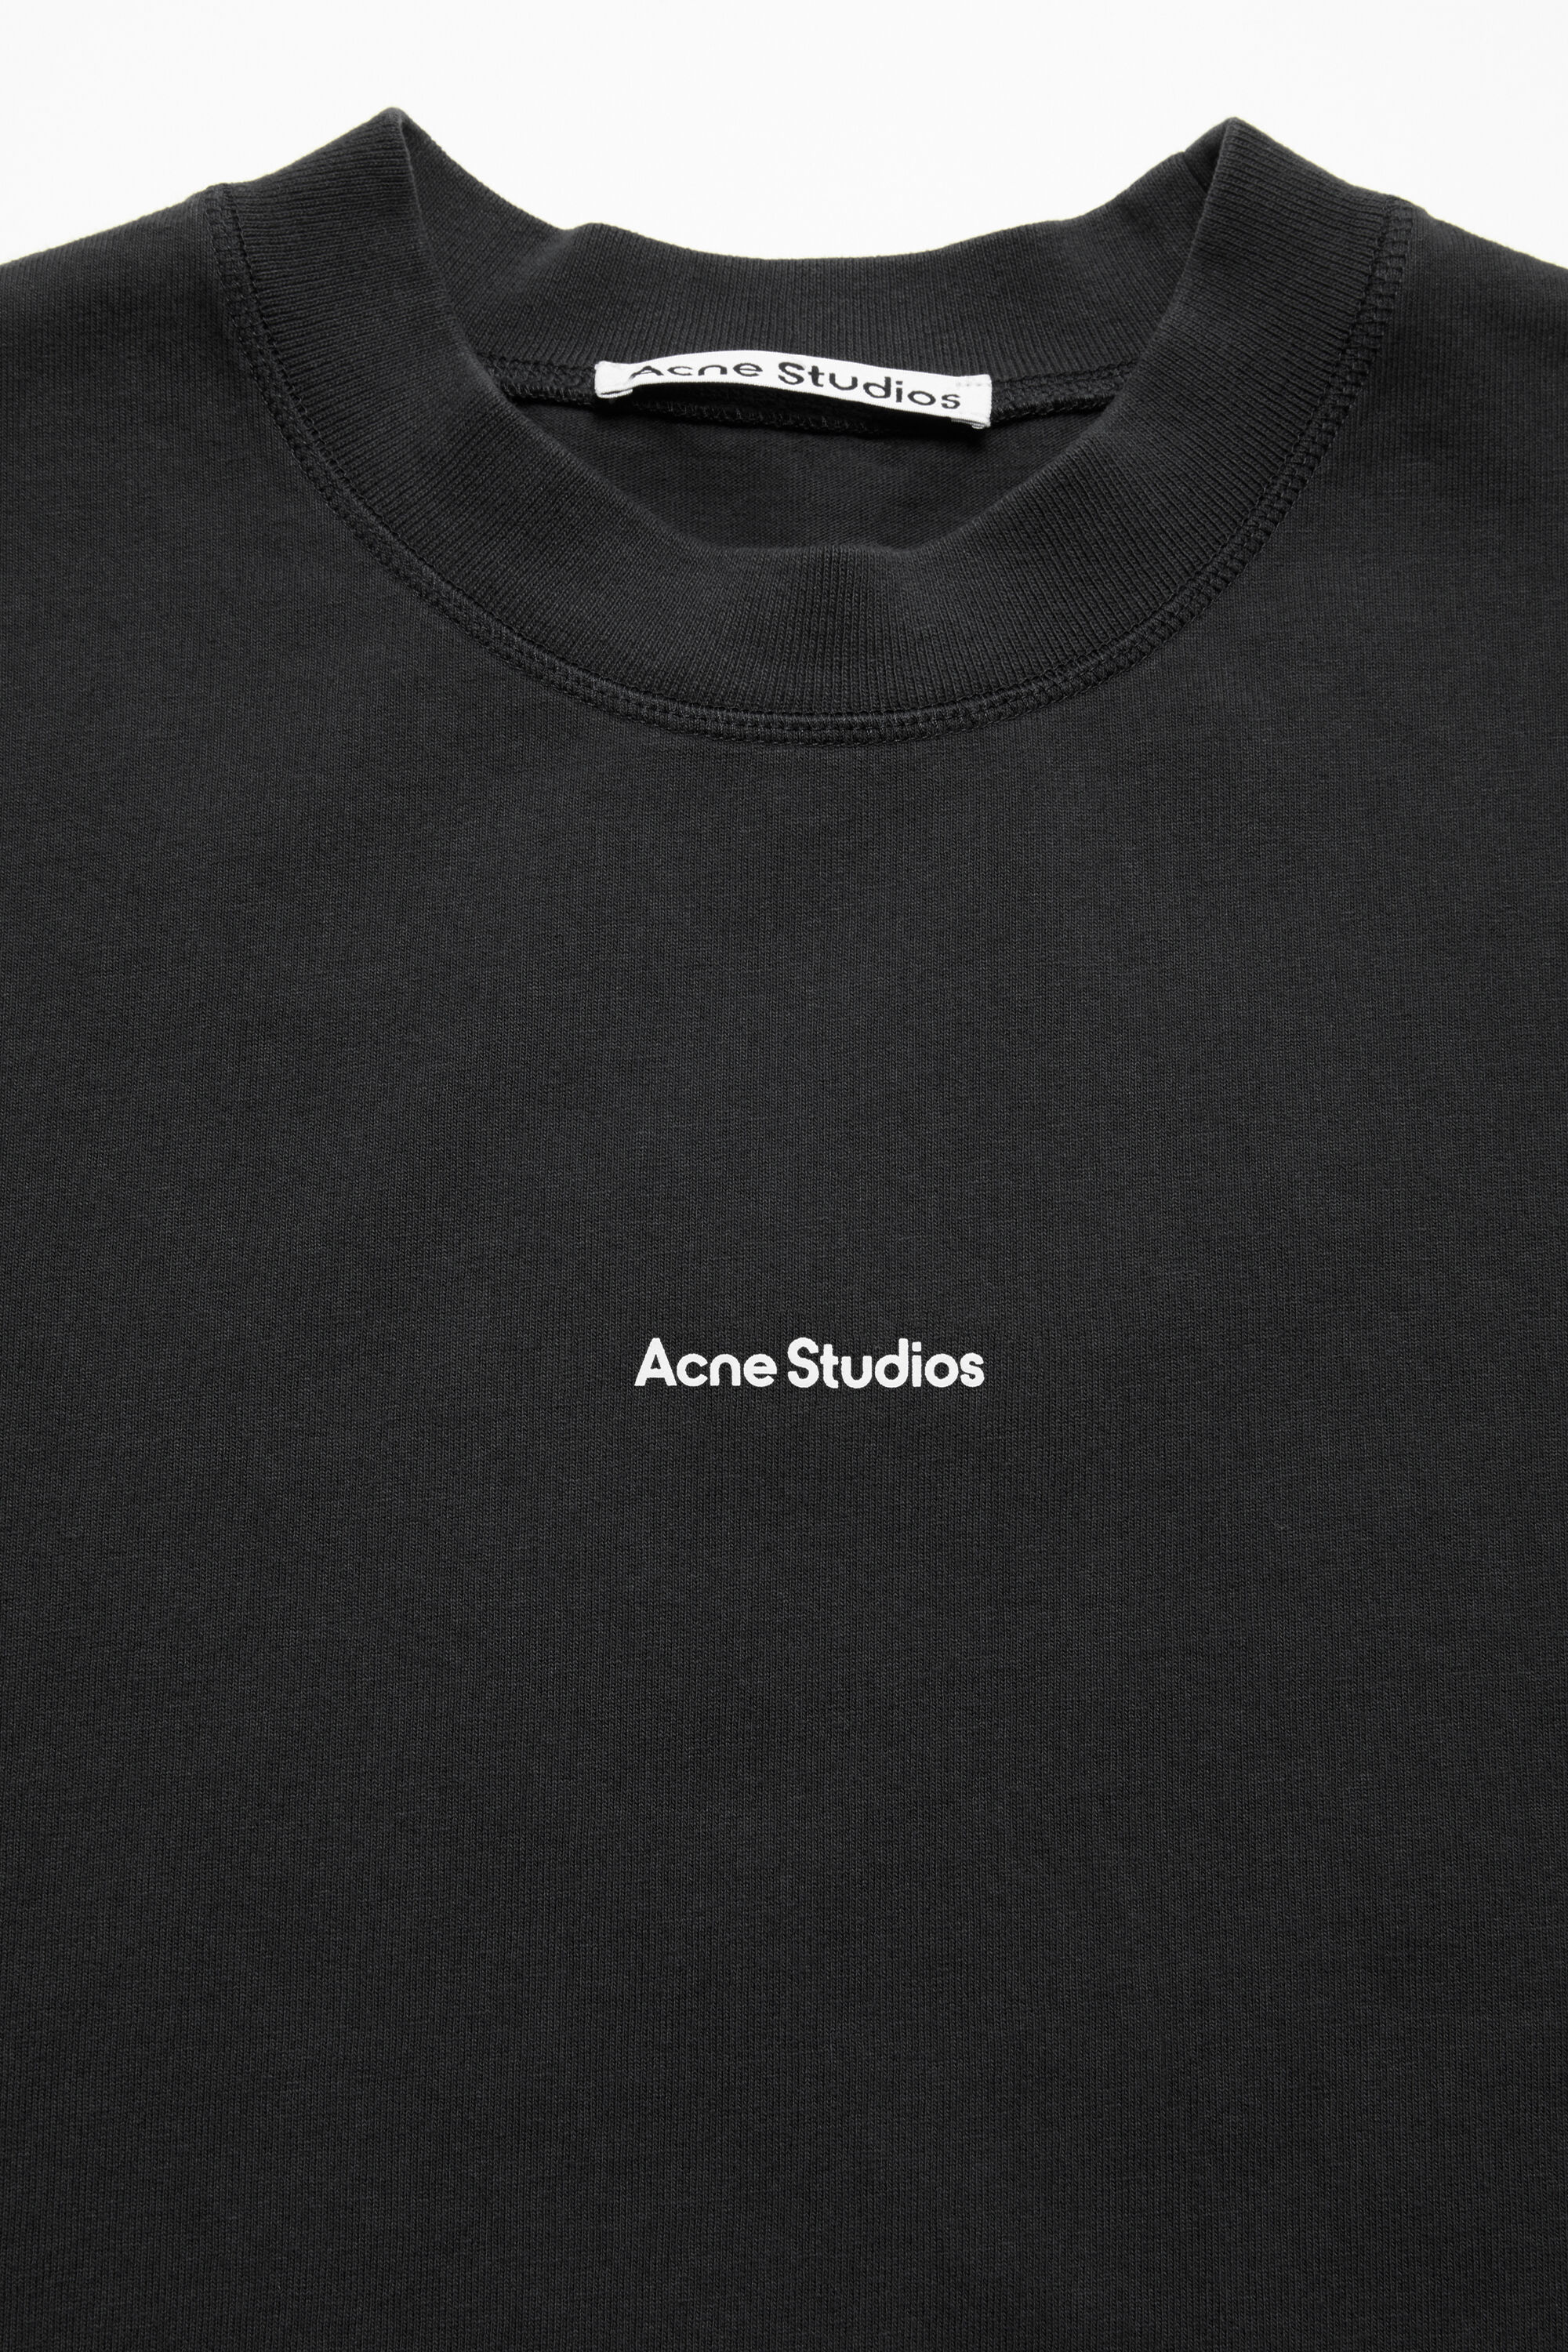 Acne Studios - ロゴTシャツ - ブラック